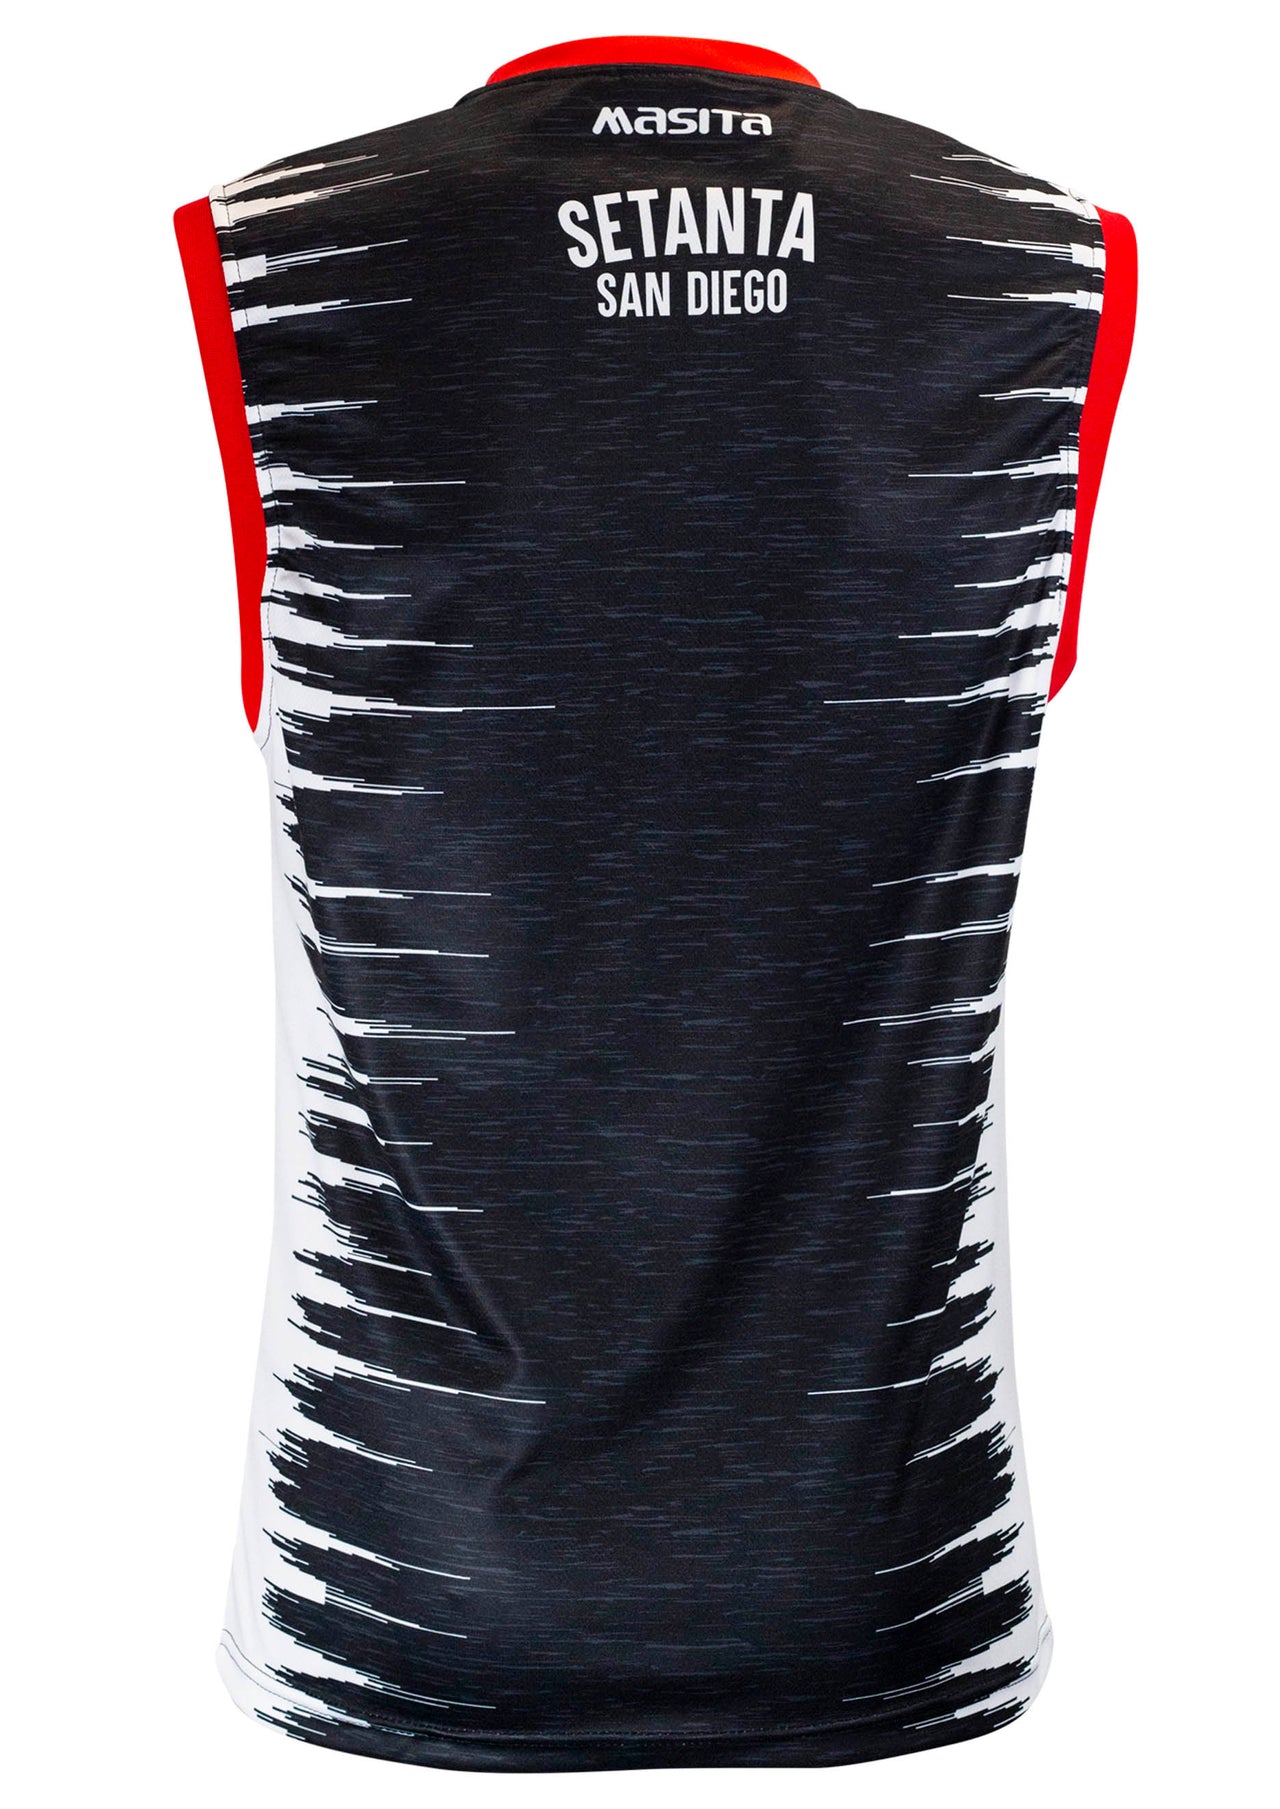 Setanta San Diego Away Sleeveless Shirt Player Fit Adult